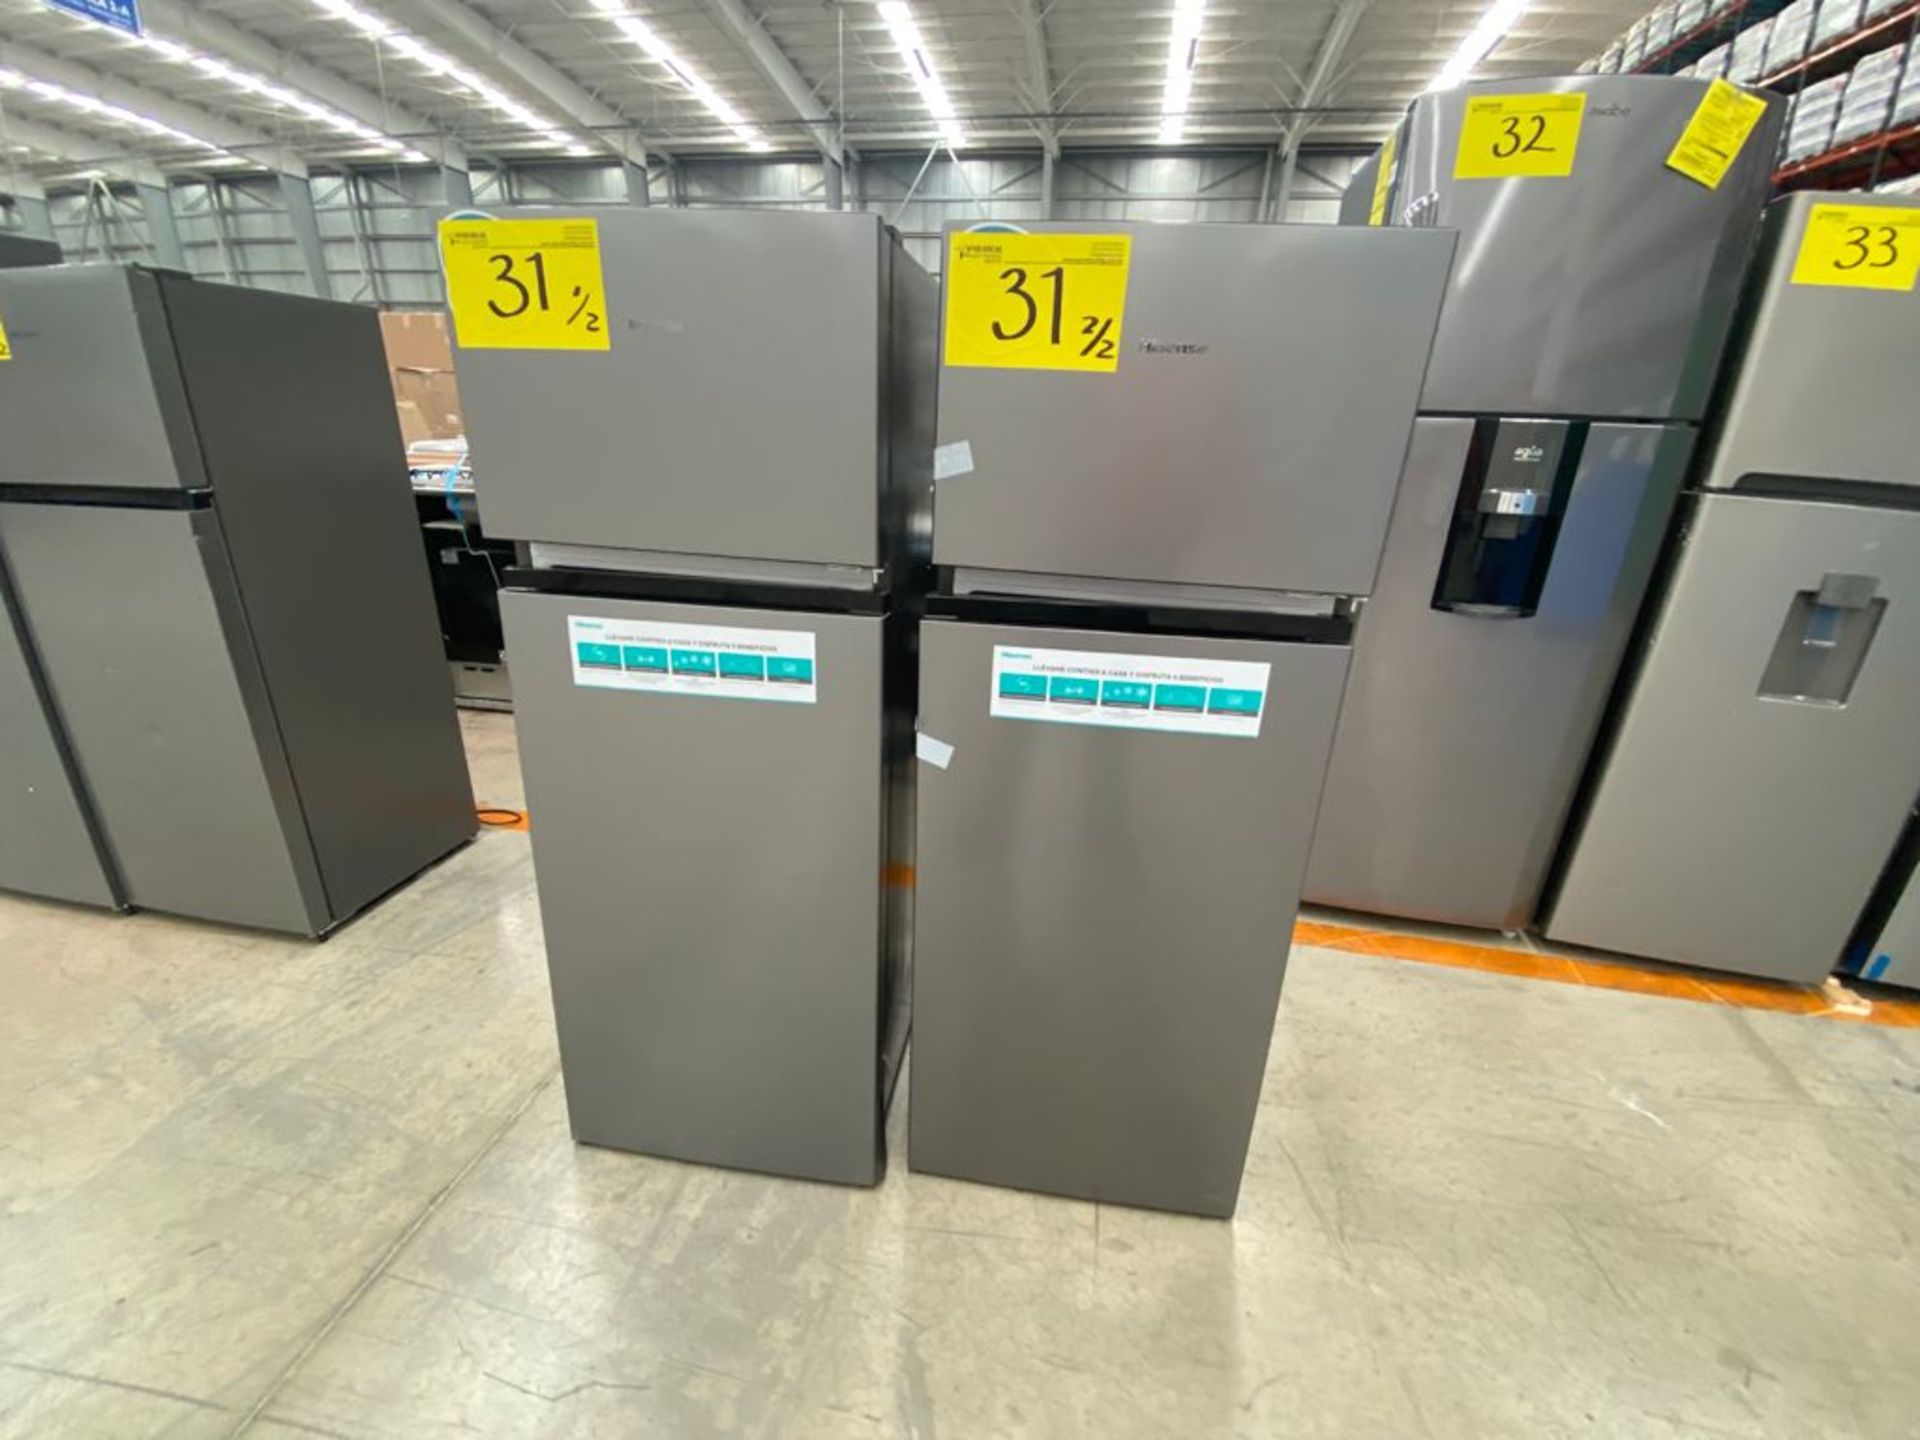 2 Refrigeradores marca Hisense color gris modelo RT80D6AWX - Image 2 of 28